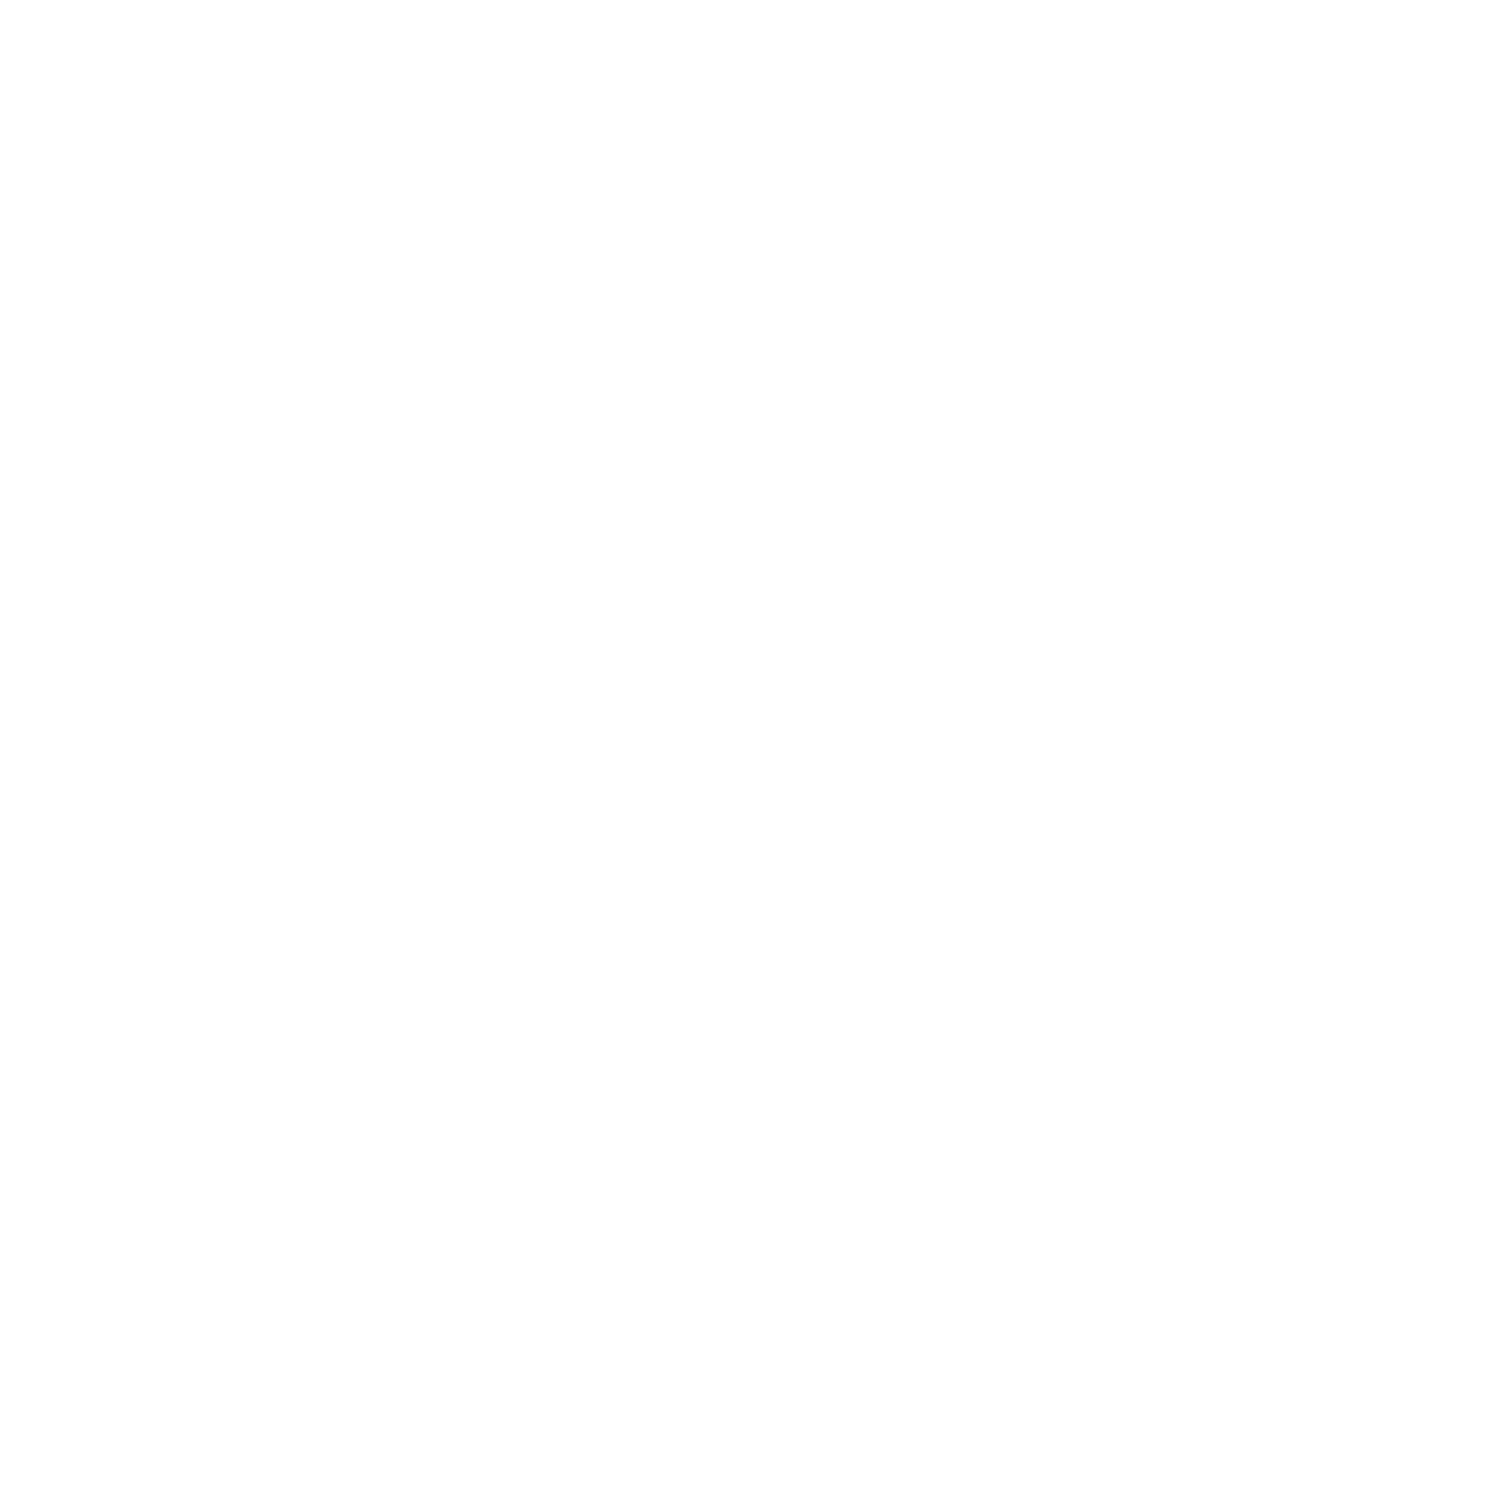 STONE HORSES